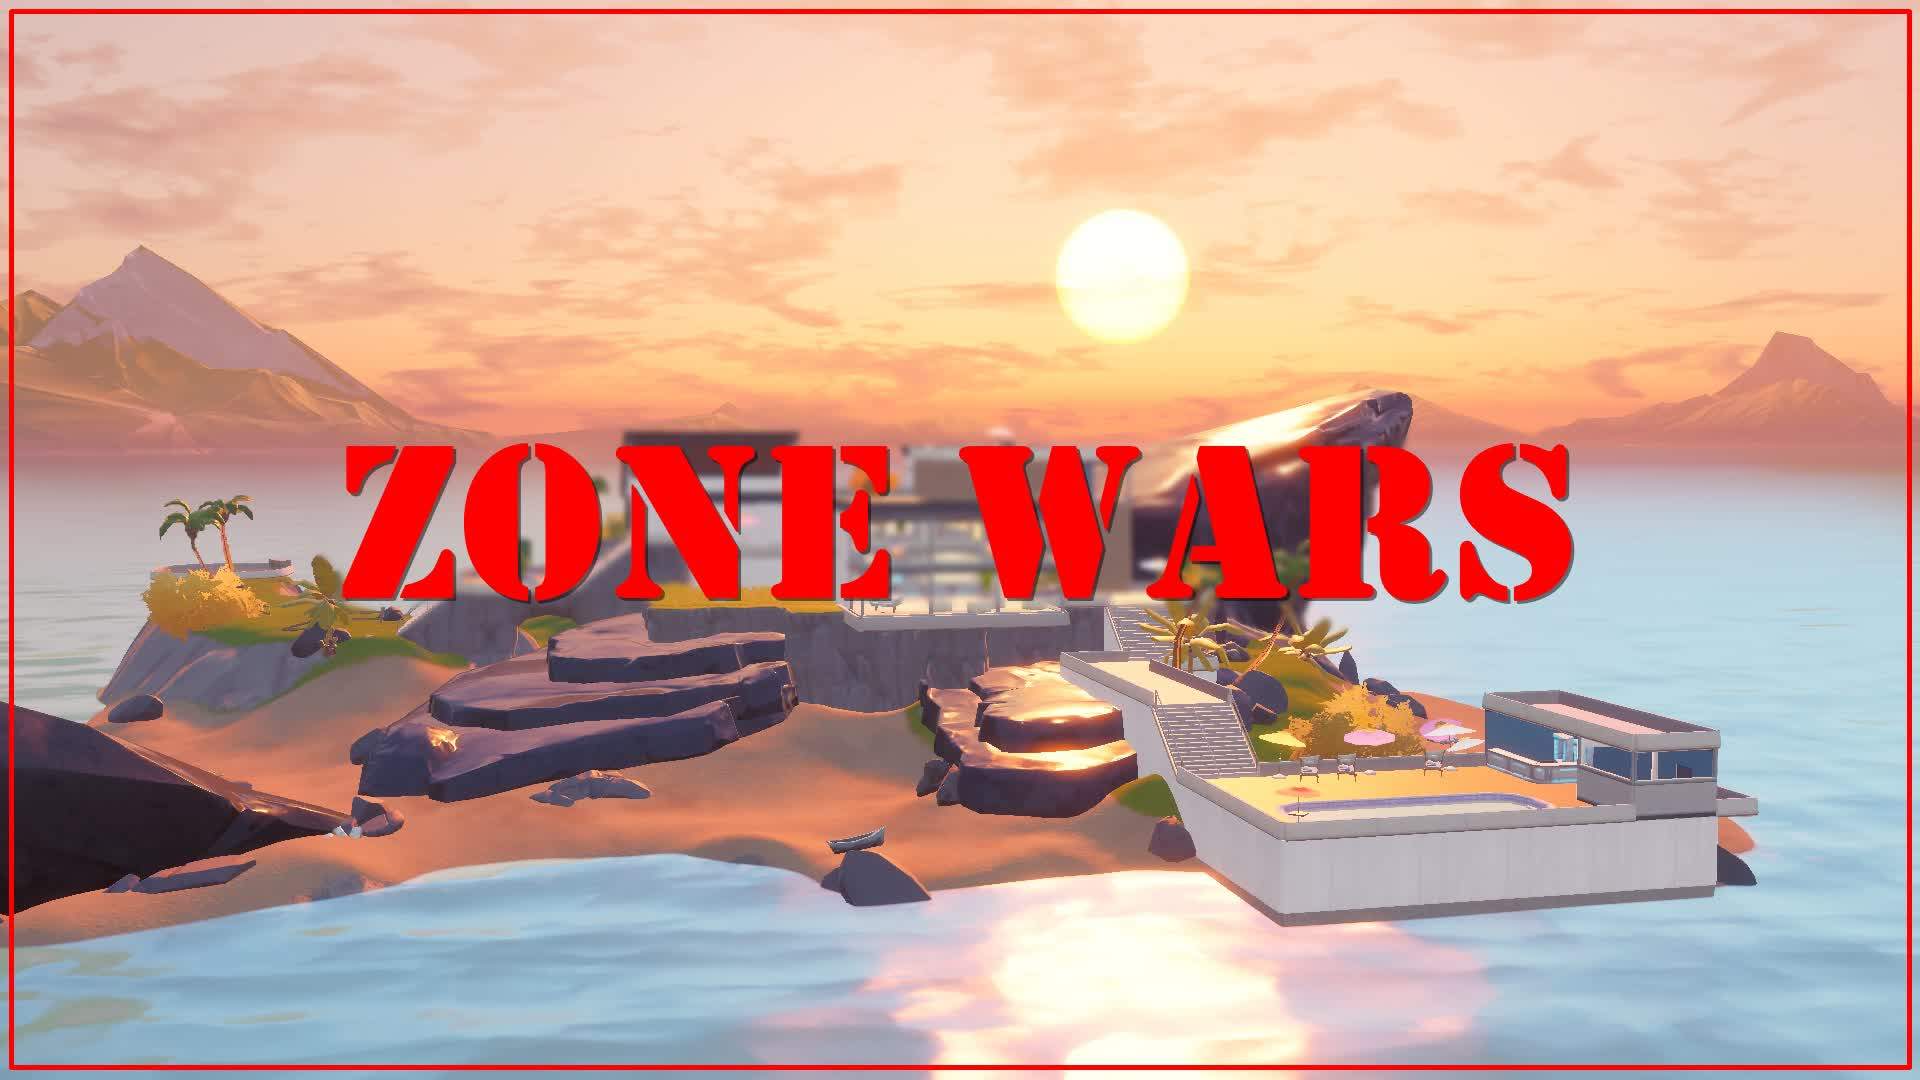 NN Zone Wars - Tubarão